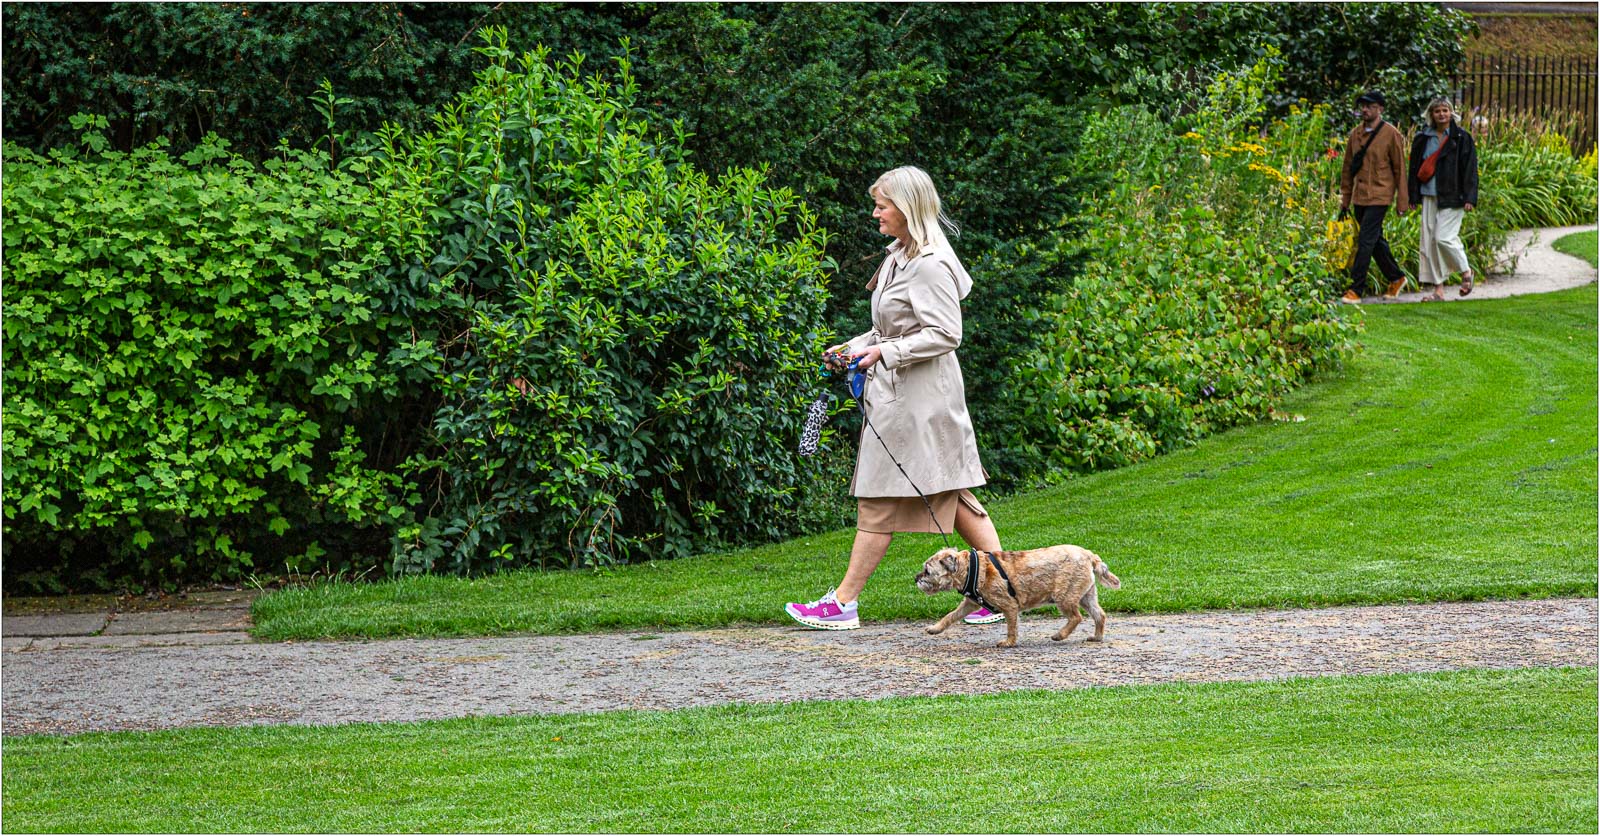 Dog Walking in Museum Gardens, Roger Poyser